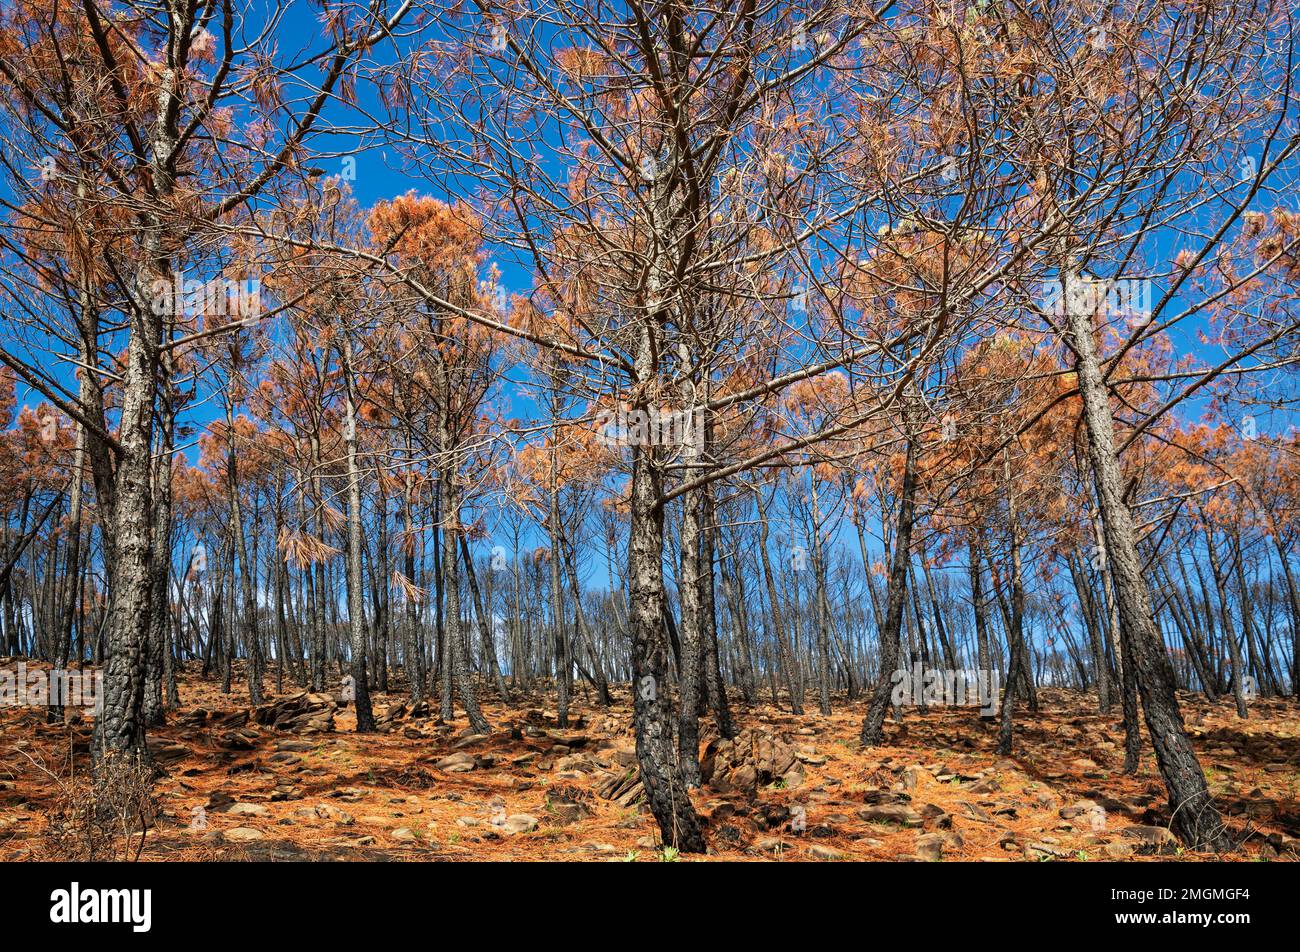 Piedra quemada o pinos de paraguas (Pinus pinea) después de un incendio forestal. Sierra Bermeja, Provincia de Málaga, Andalucía, España. Foto de stock